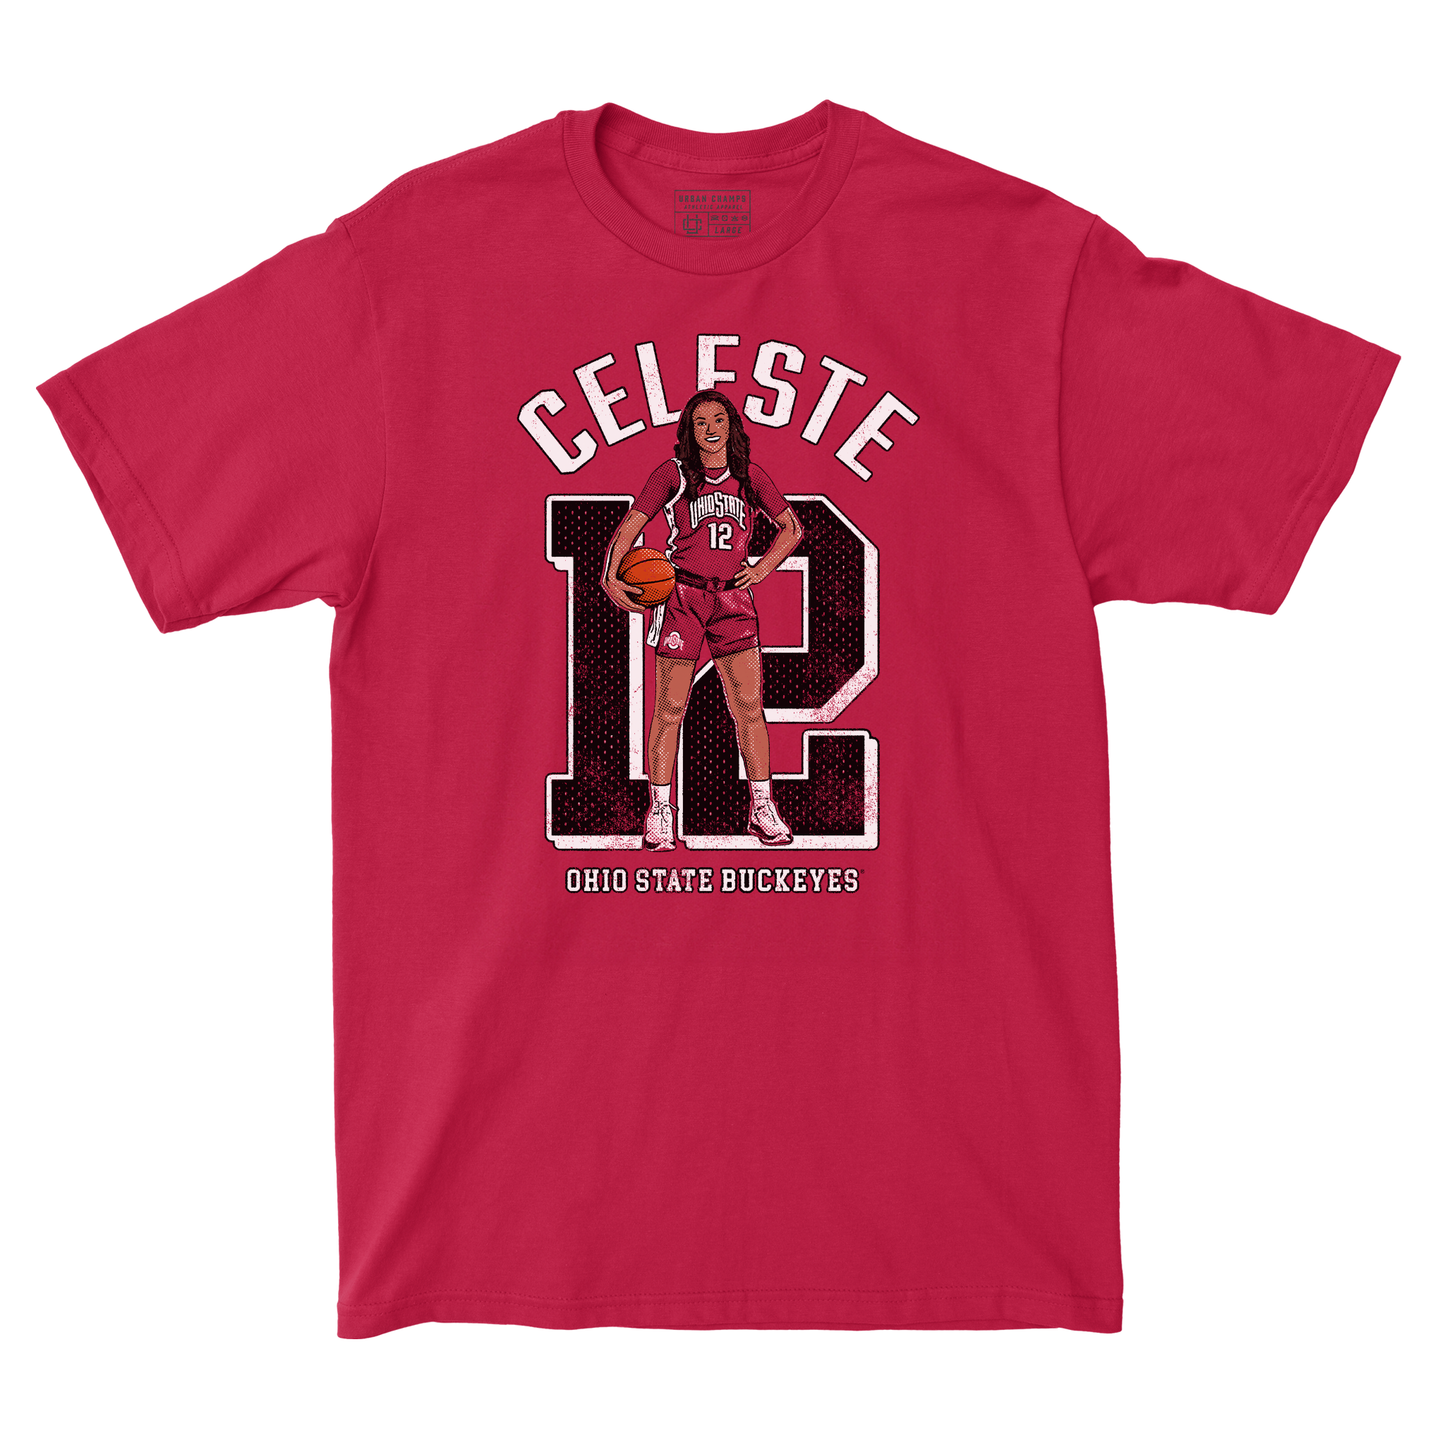 EXCLUSIVE RELEASE: Celeste Taylor Jersey T-Shirt